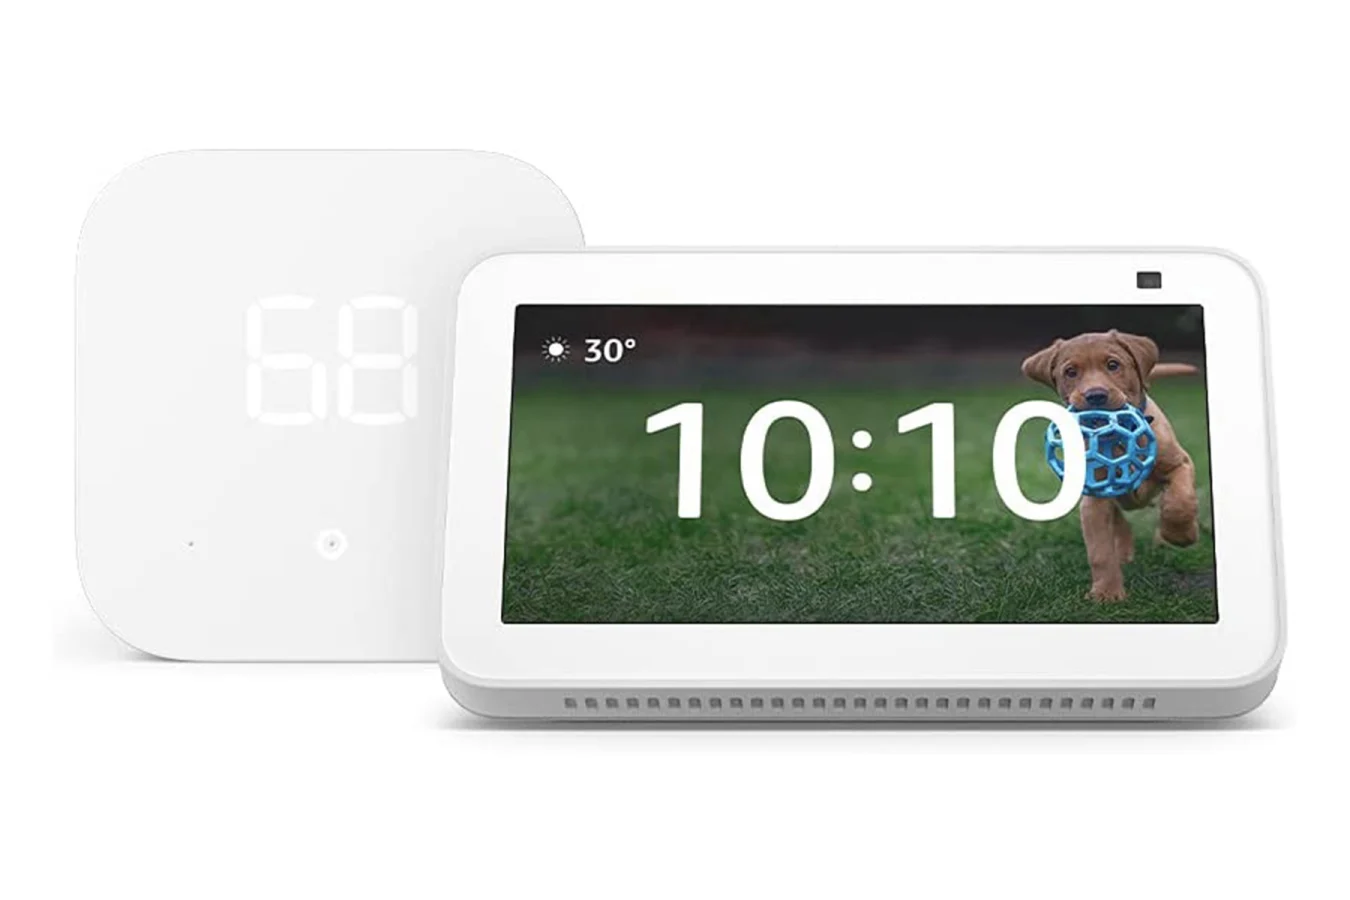 Amazon Smart Thermostat + Echo Show 5